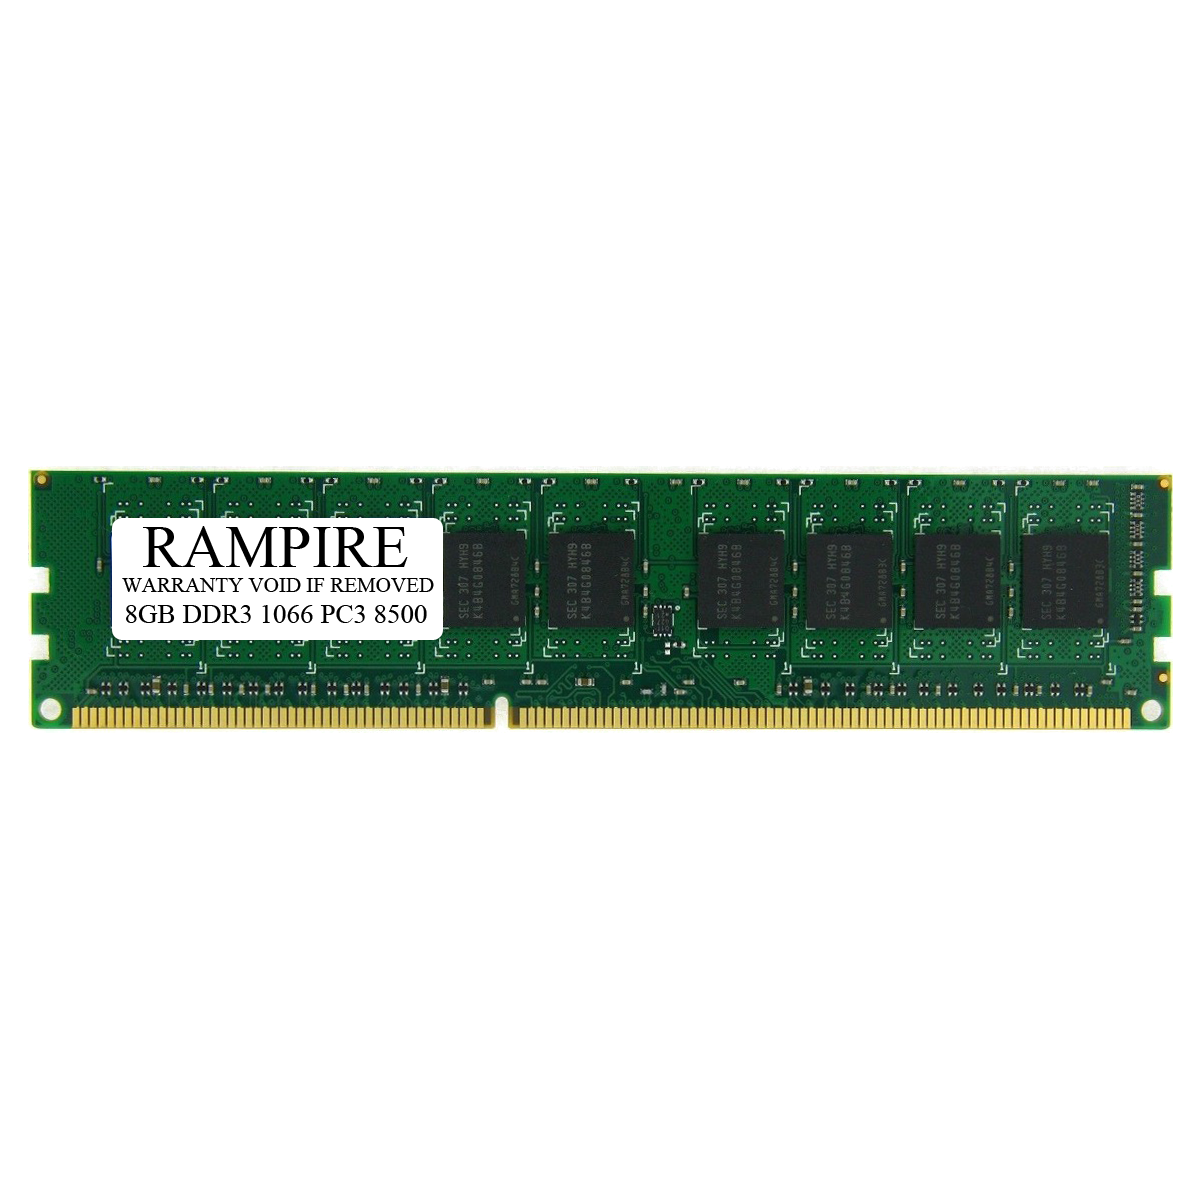 RAMPIRE 8GB DDR3 1066 (PC3 8500) 240-Pin SDRAM 2Rx8 Standard Profile 1.5V ECC Unregistered Server Memory